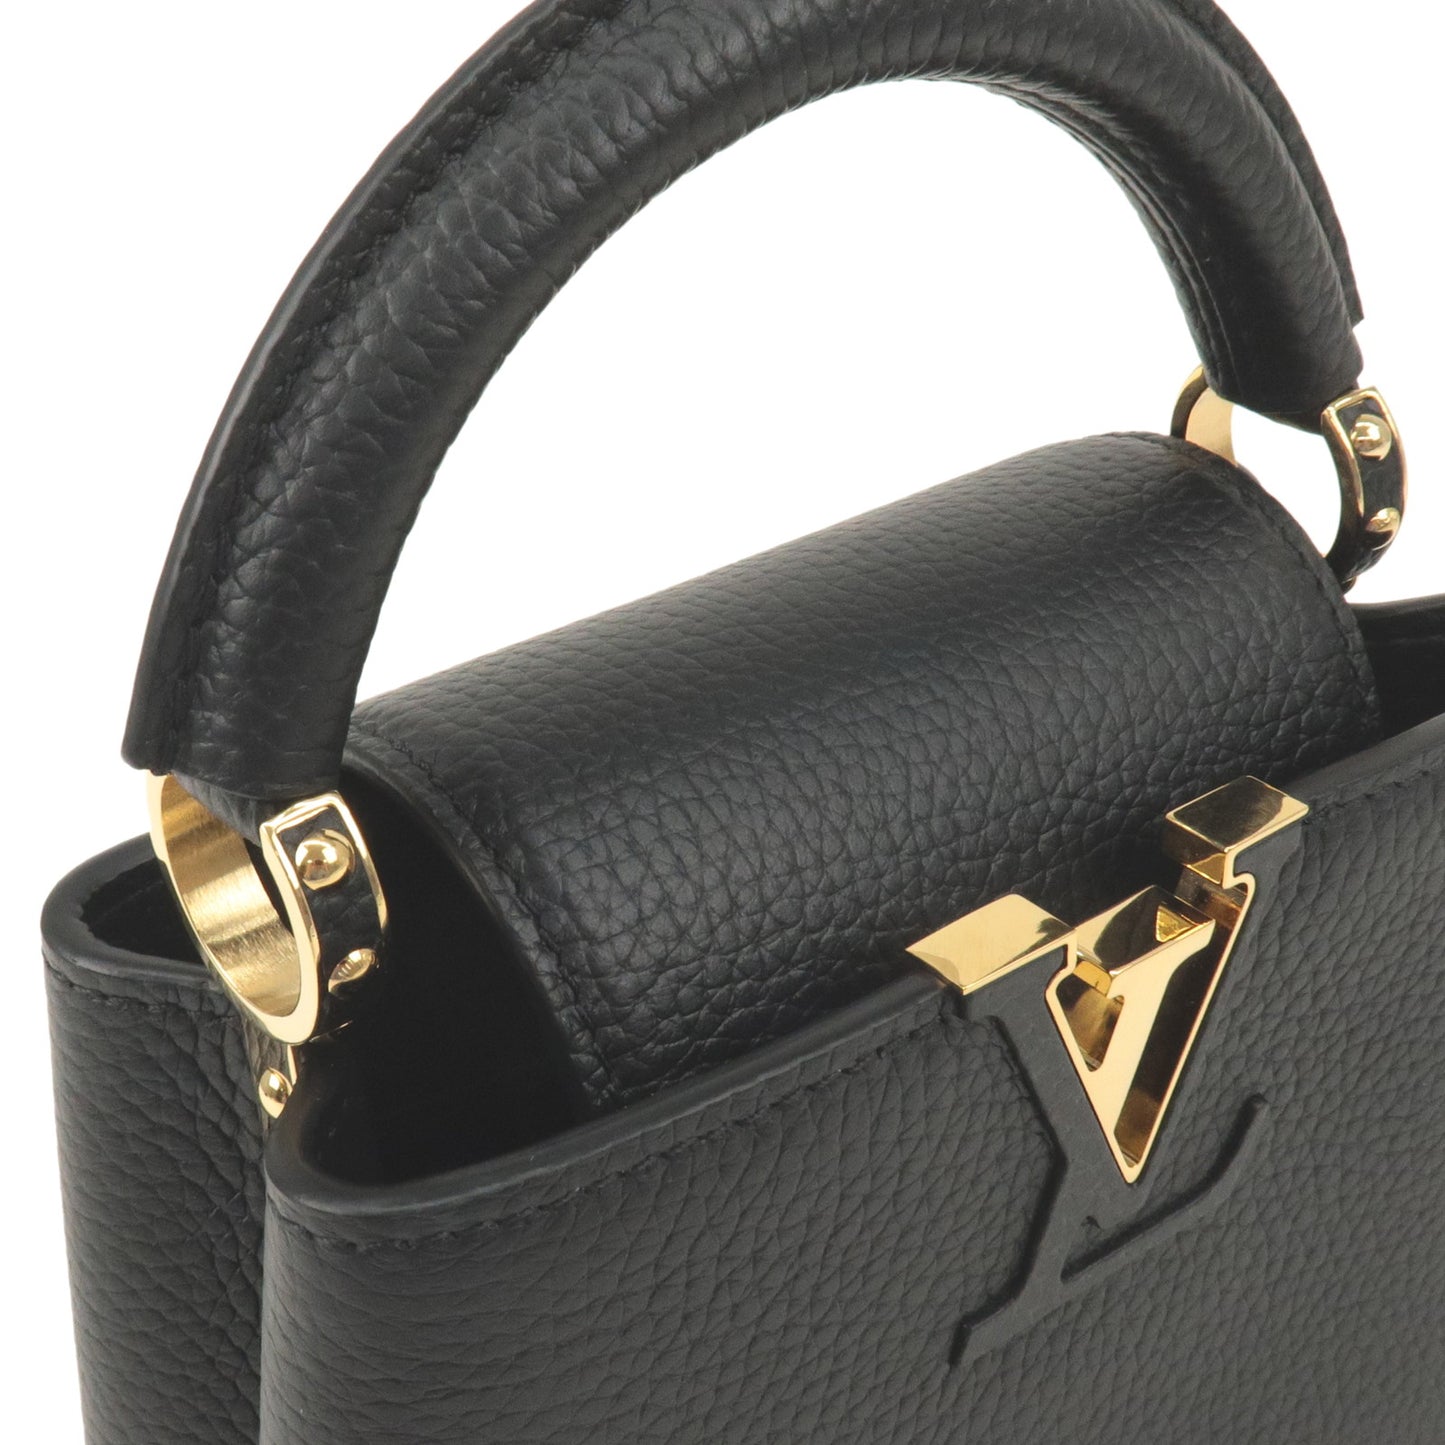 Louis Vuitton Capucines Mini Handbag Taurillon Leather M56071